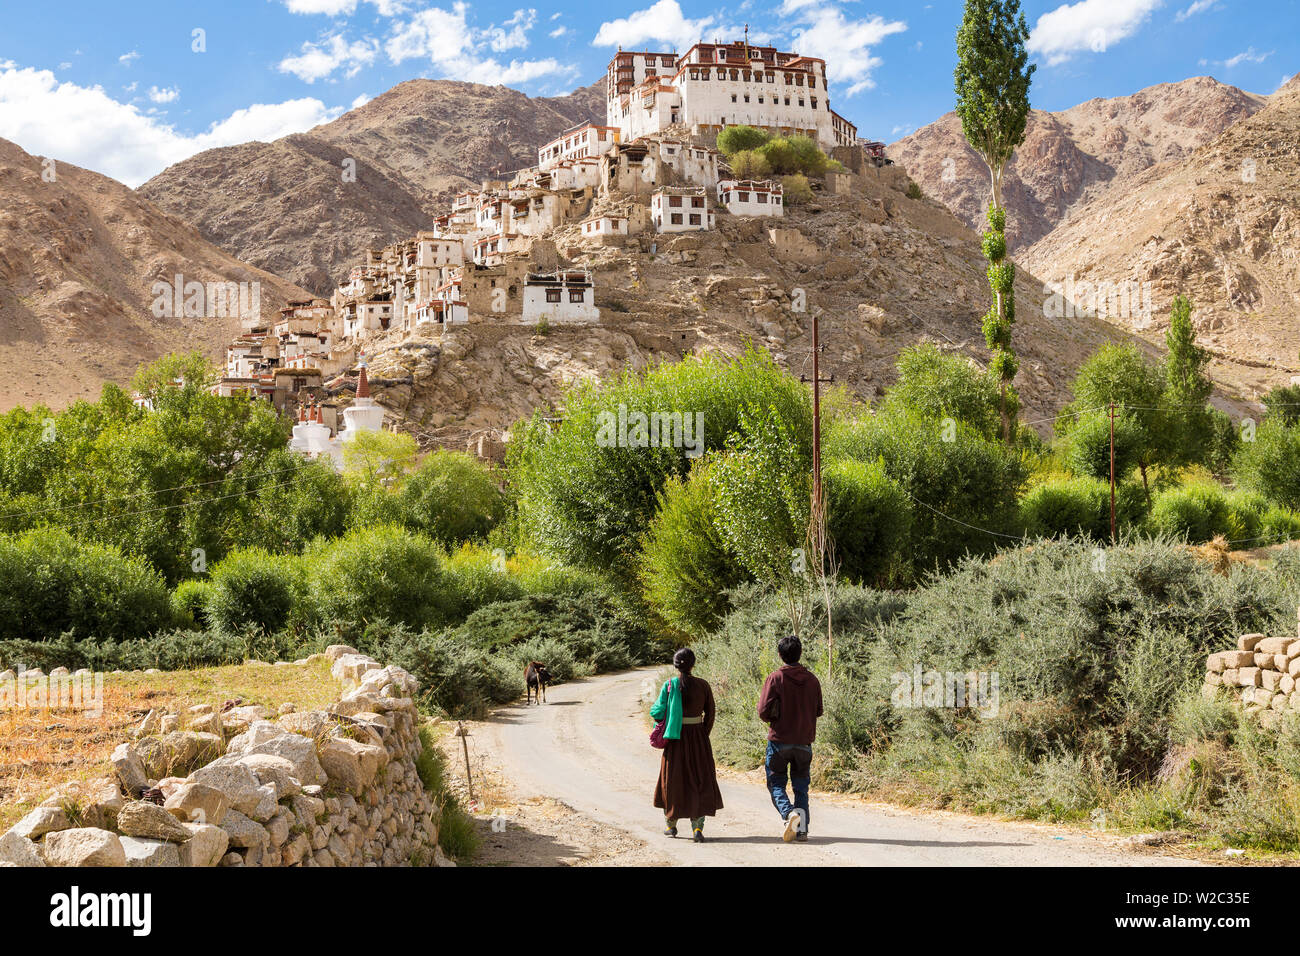 Kloster Chemre oder Chemrey, nr Leh, Ladakh, Indien Stockfoto